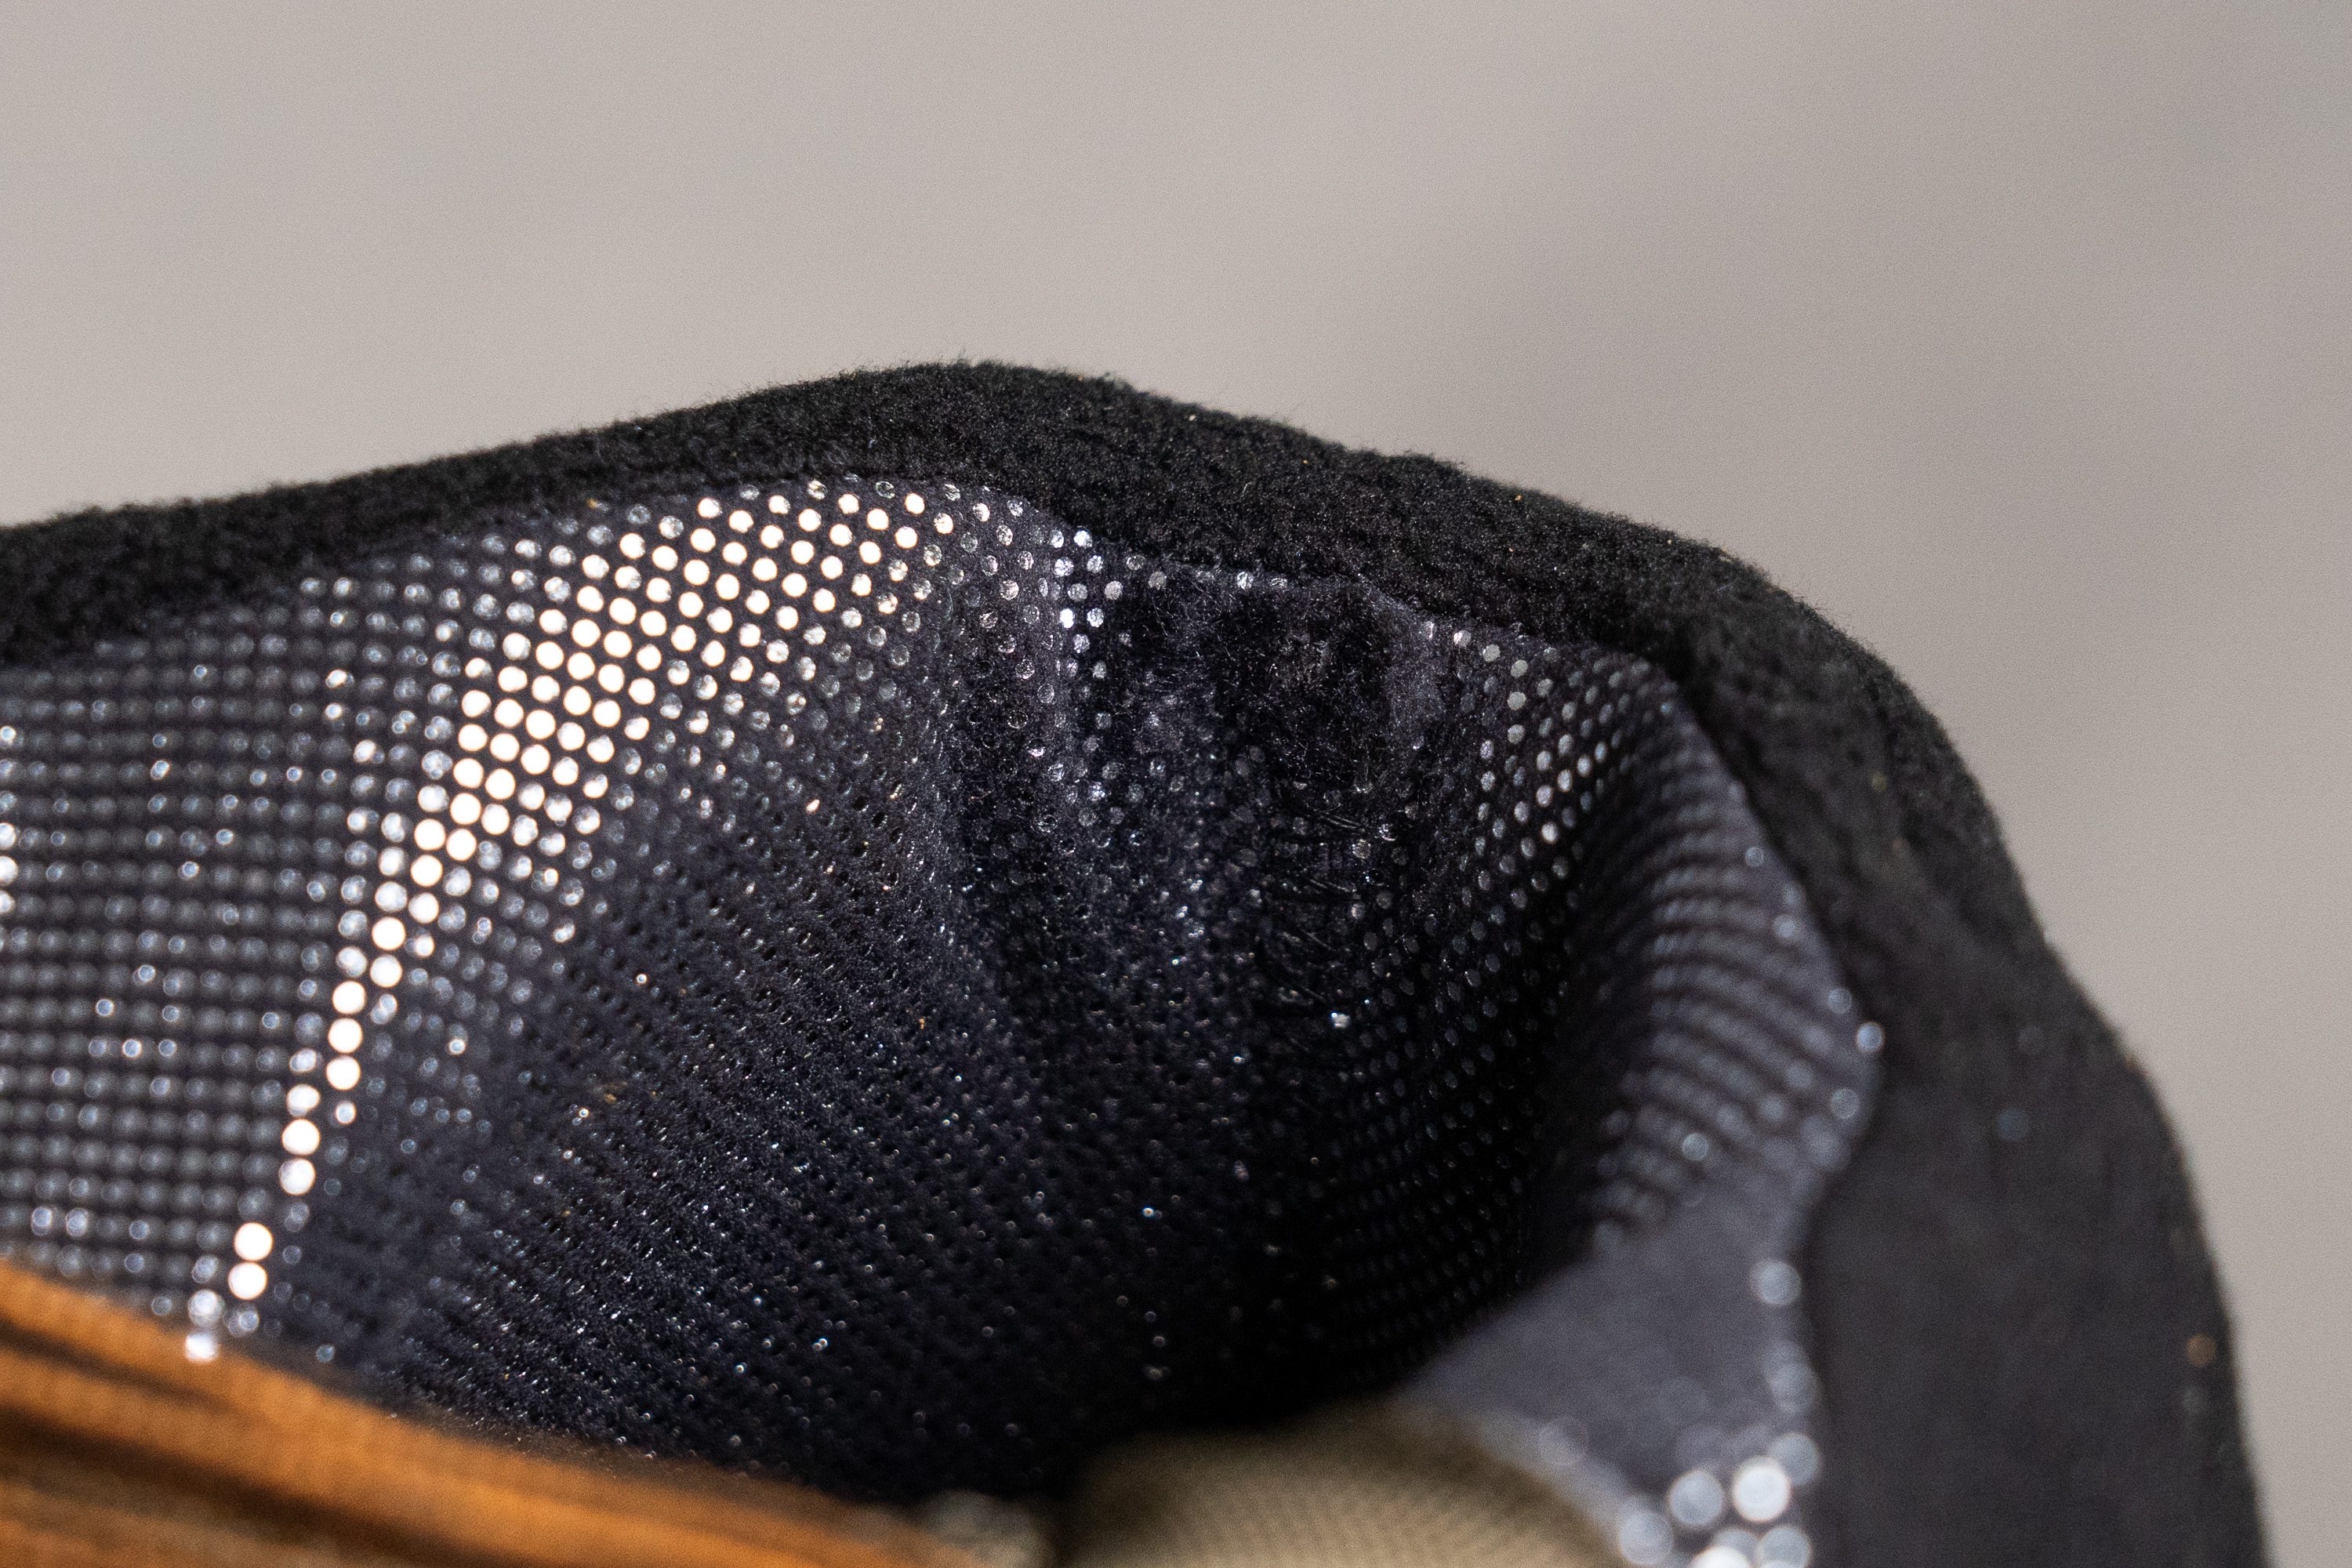 Columbia zapatillas de running Adidas hombre pista talla 33.5 Heel padding durability test